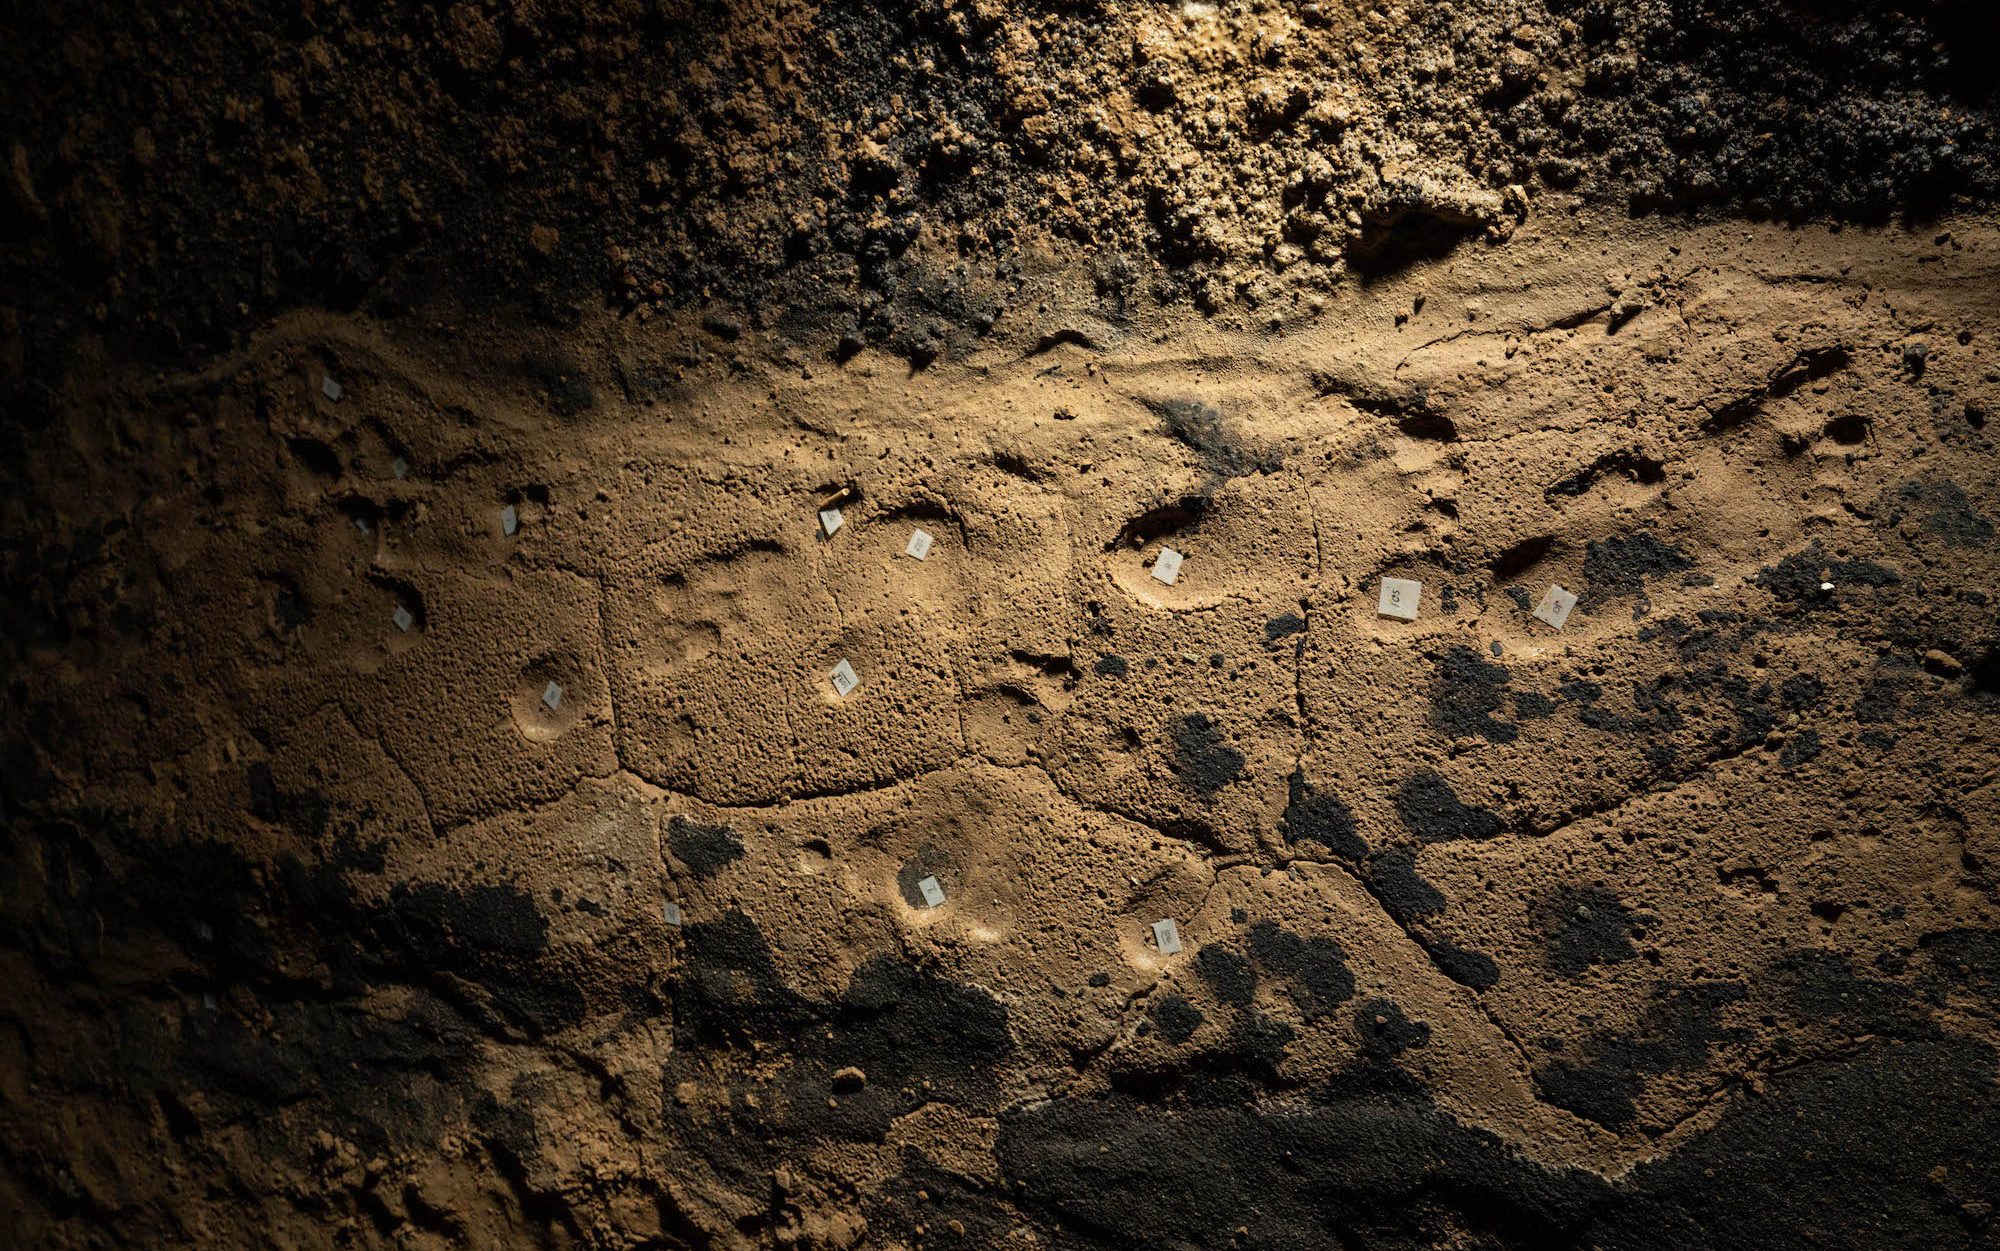 footprints on a cave floor